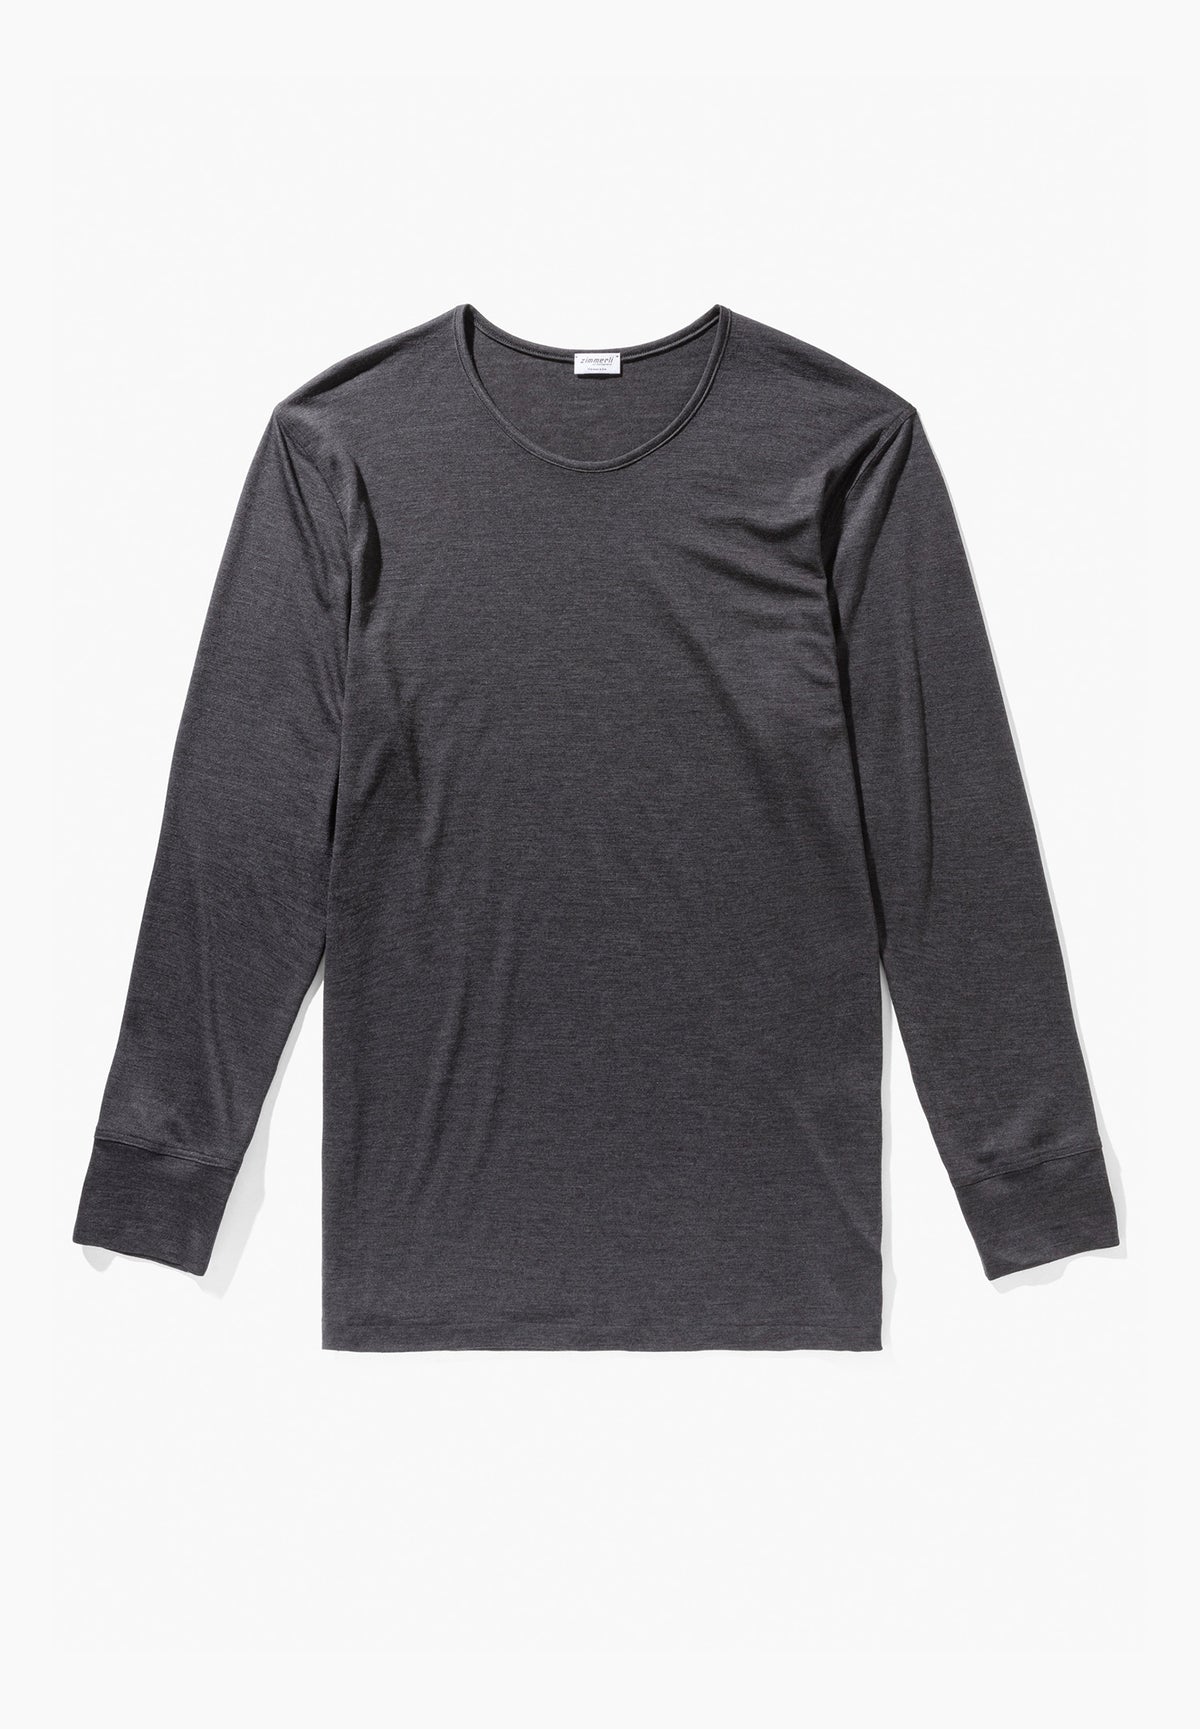 Wool &amp; Silk | T-Shirt Long Sleeve - charcoal